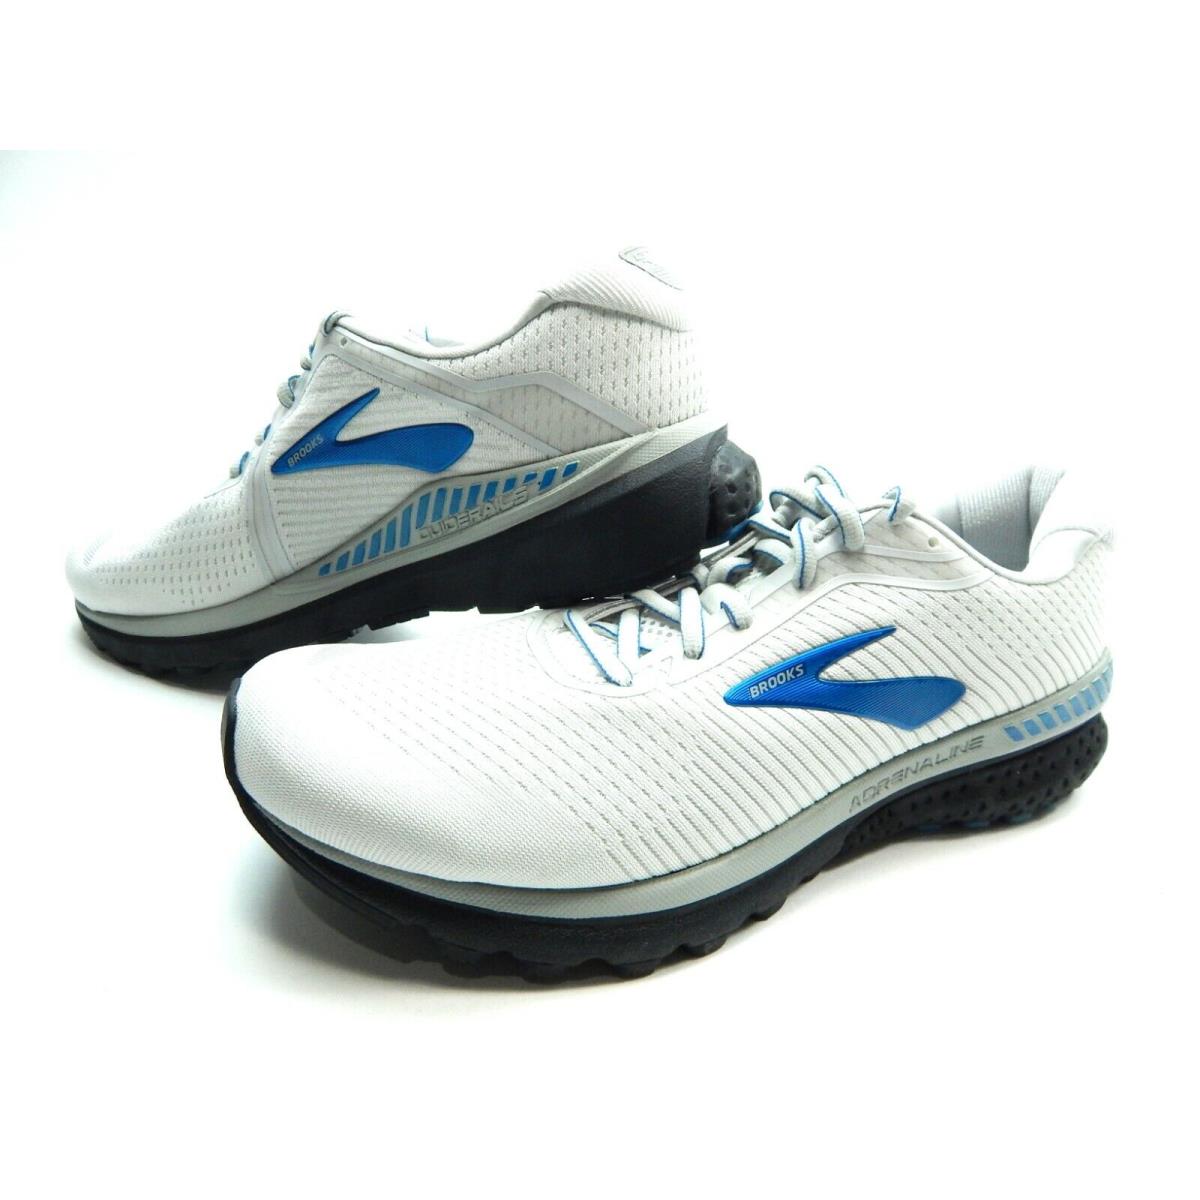 Brooks shoes Adrenaline GTS - Gray 6